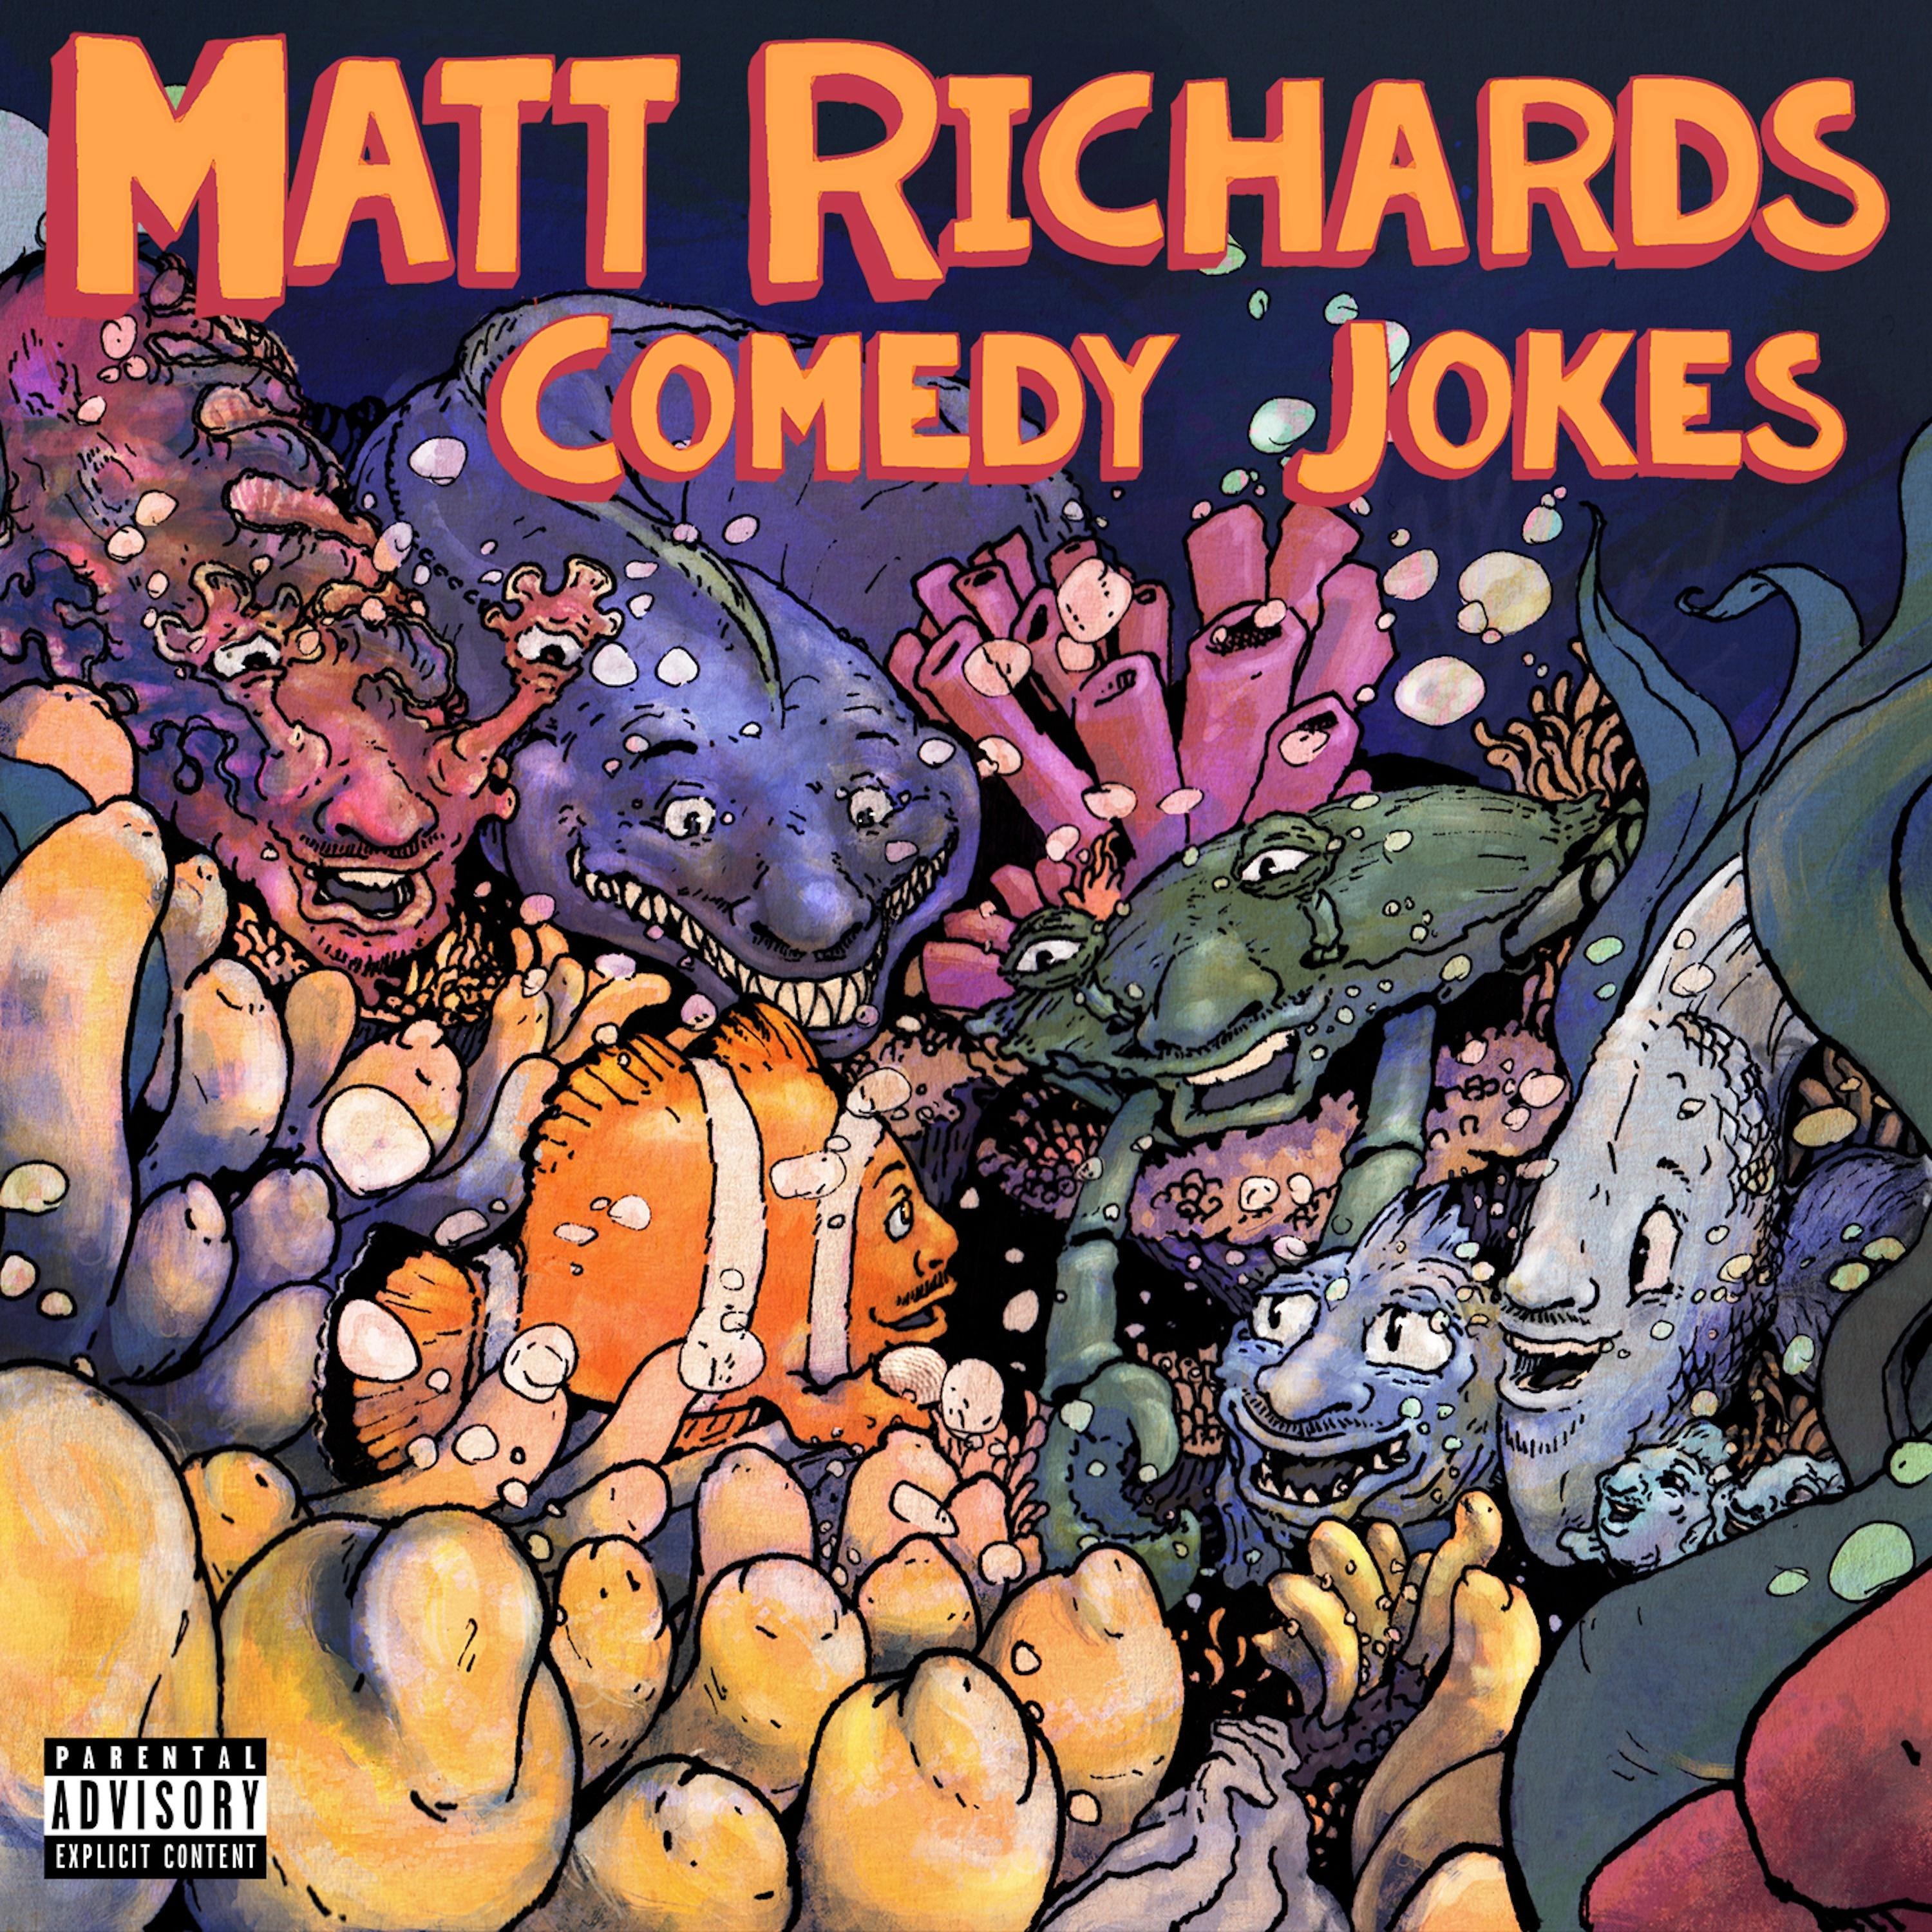 Matt Richards - I'm Very Good At Accents, So Here's A Joke